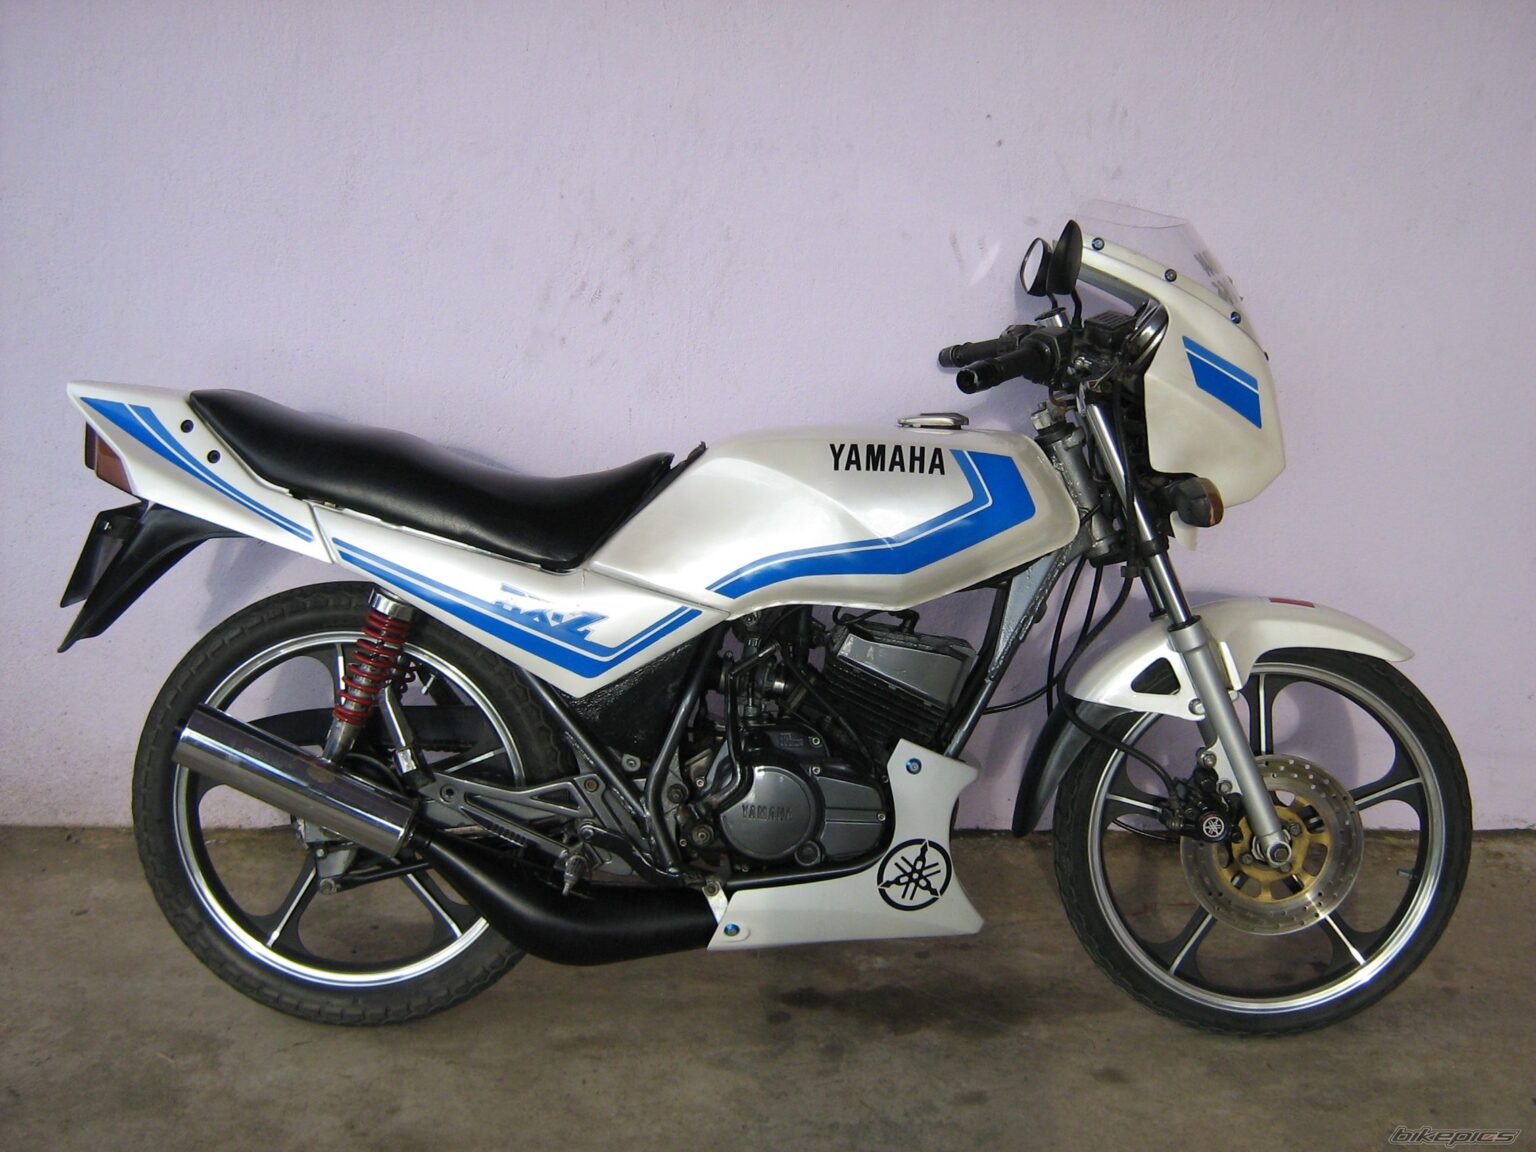 Manual de Partes Moto Yamaha 3UK3 1993 DESCARGAR GRATIS